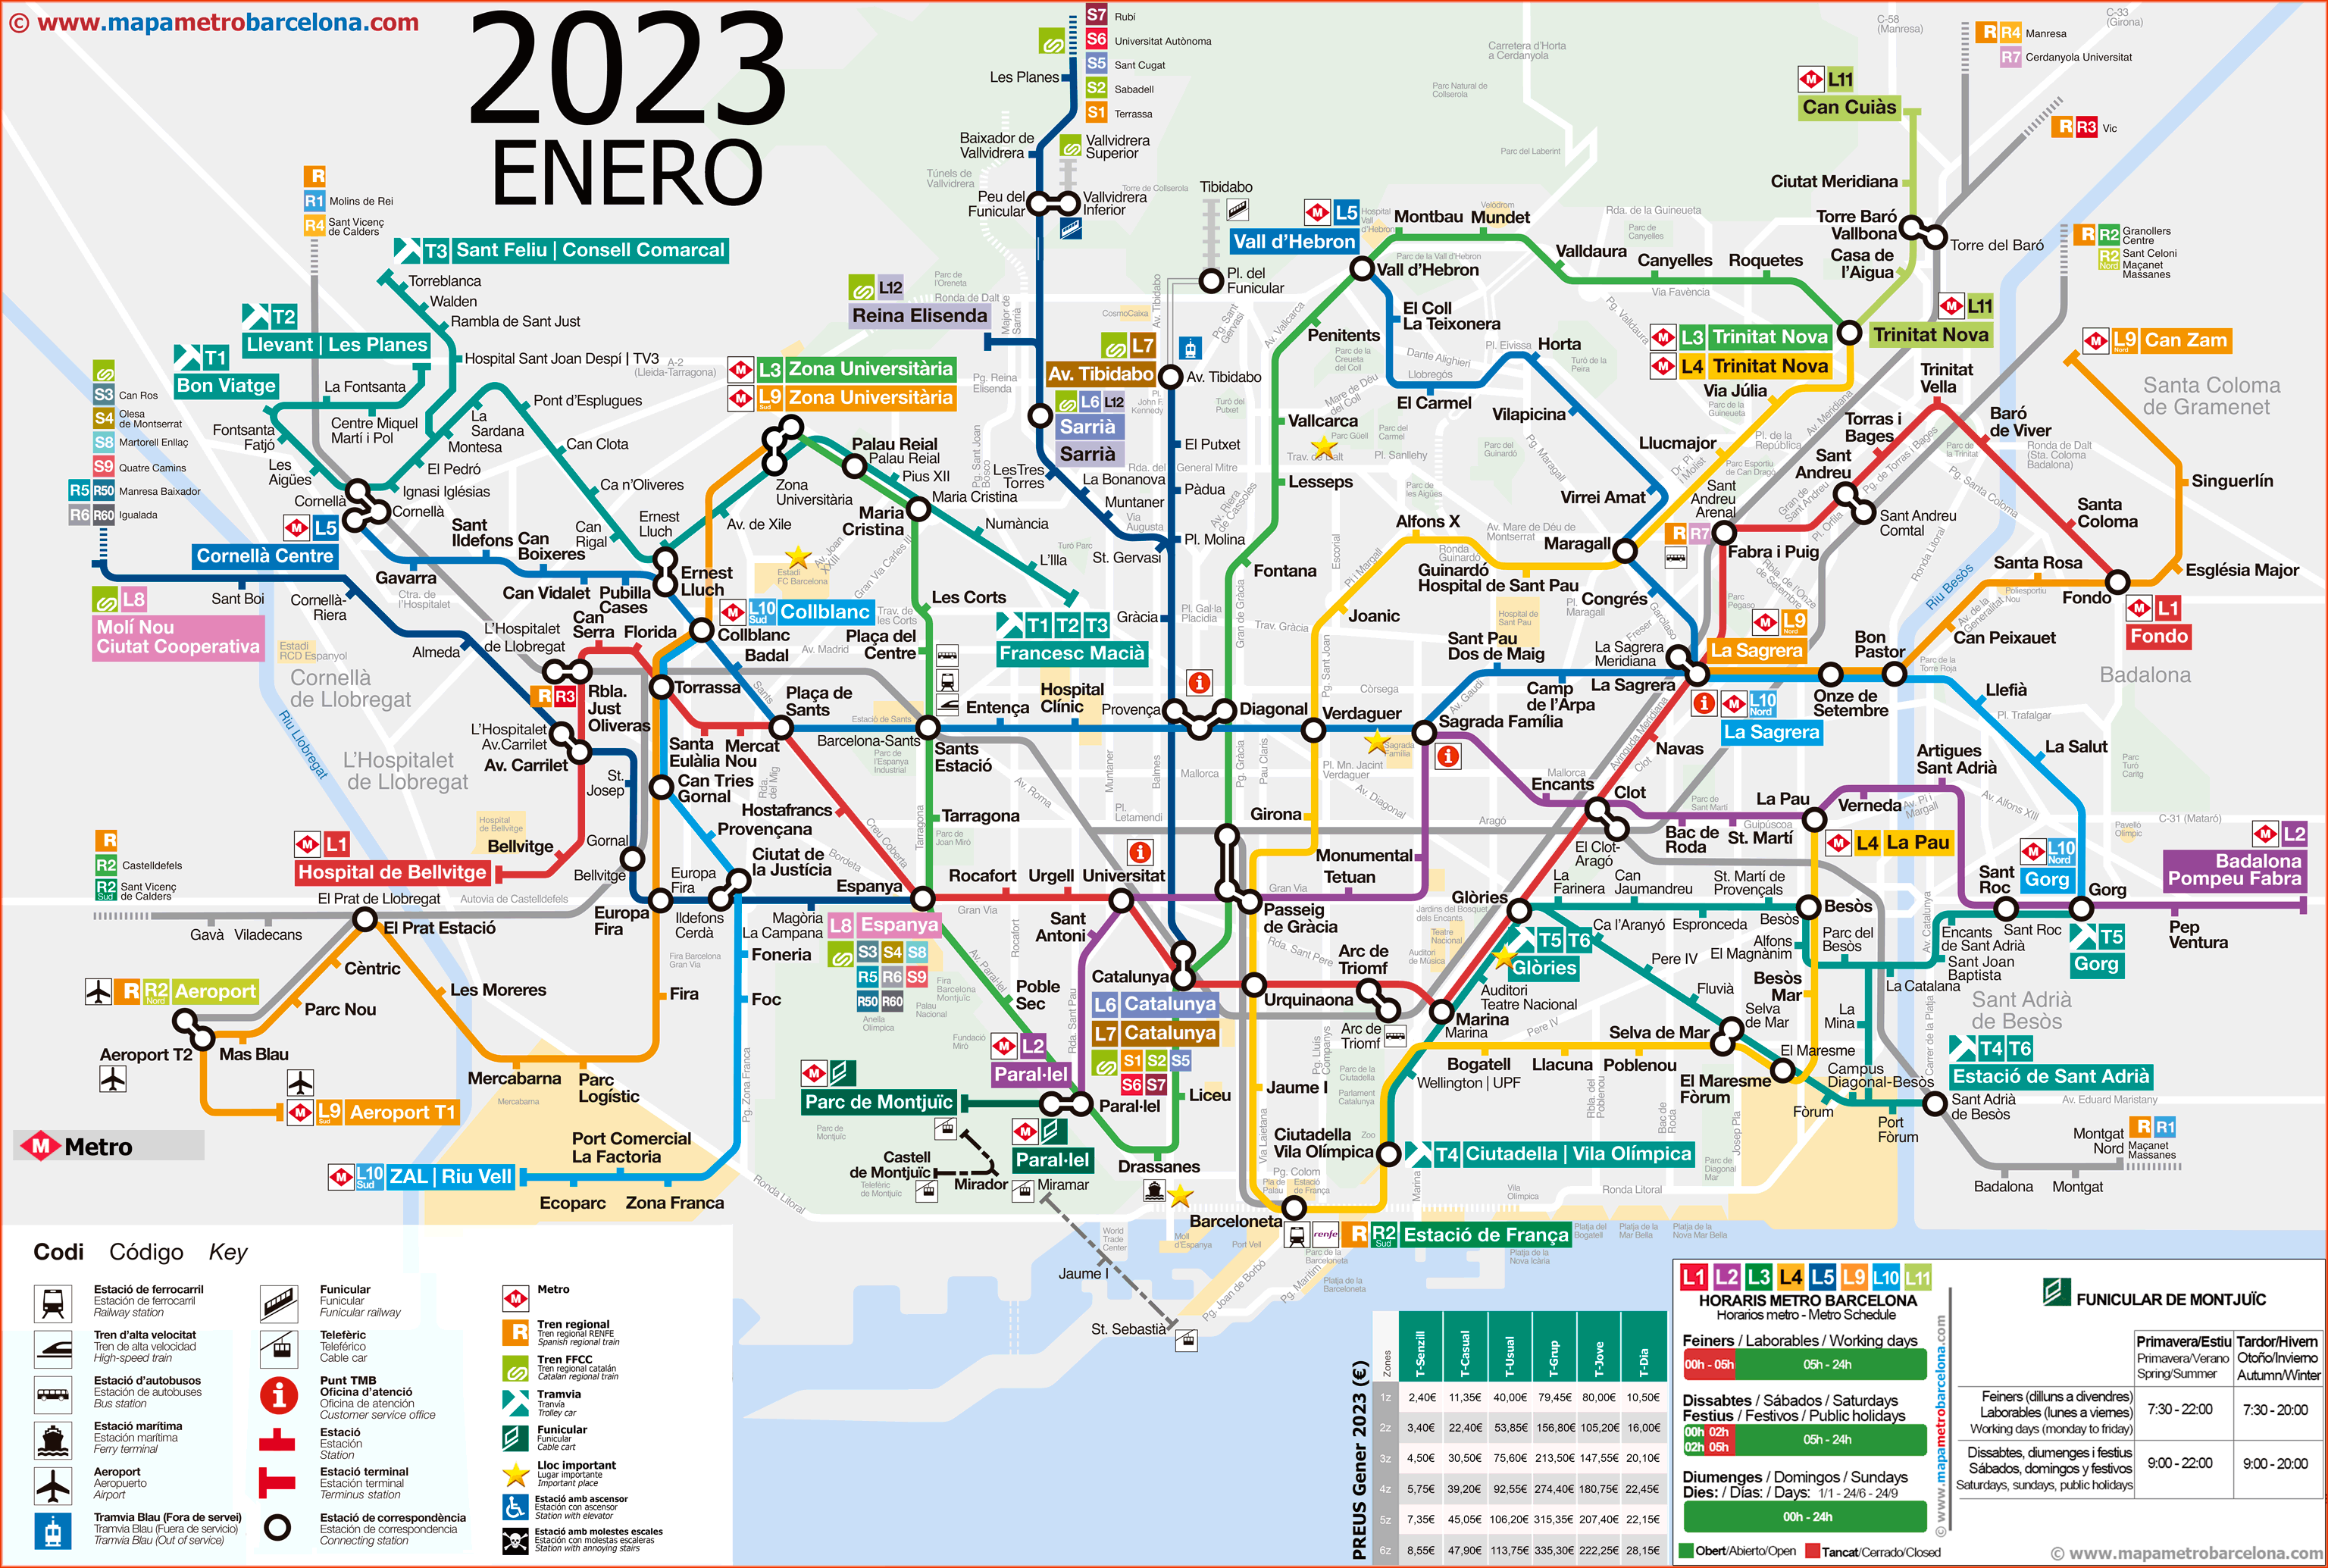 Arriba 39+ imagen mapa metro barcelona pdf